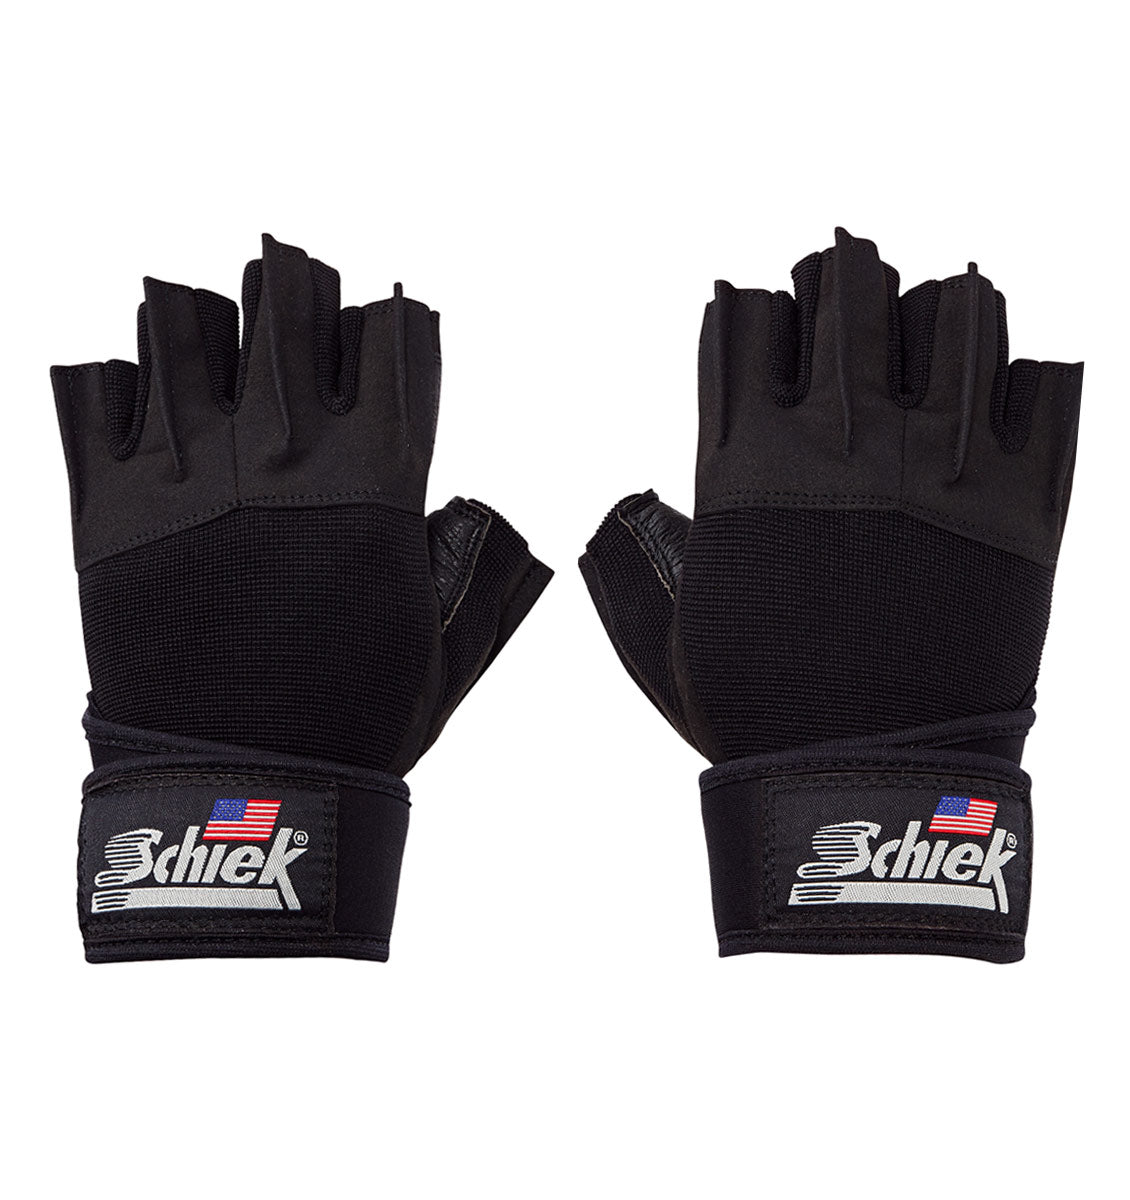 540 Schiek Platinum Series Lifting Gym Gloves with Wrist Wraps Pair Top